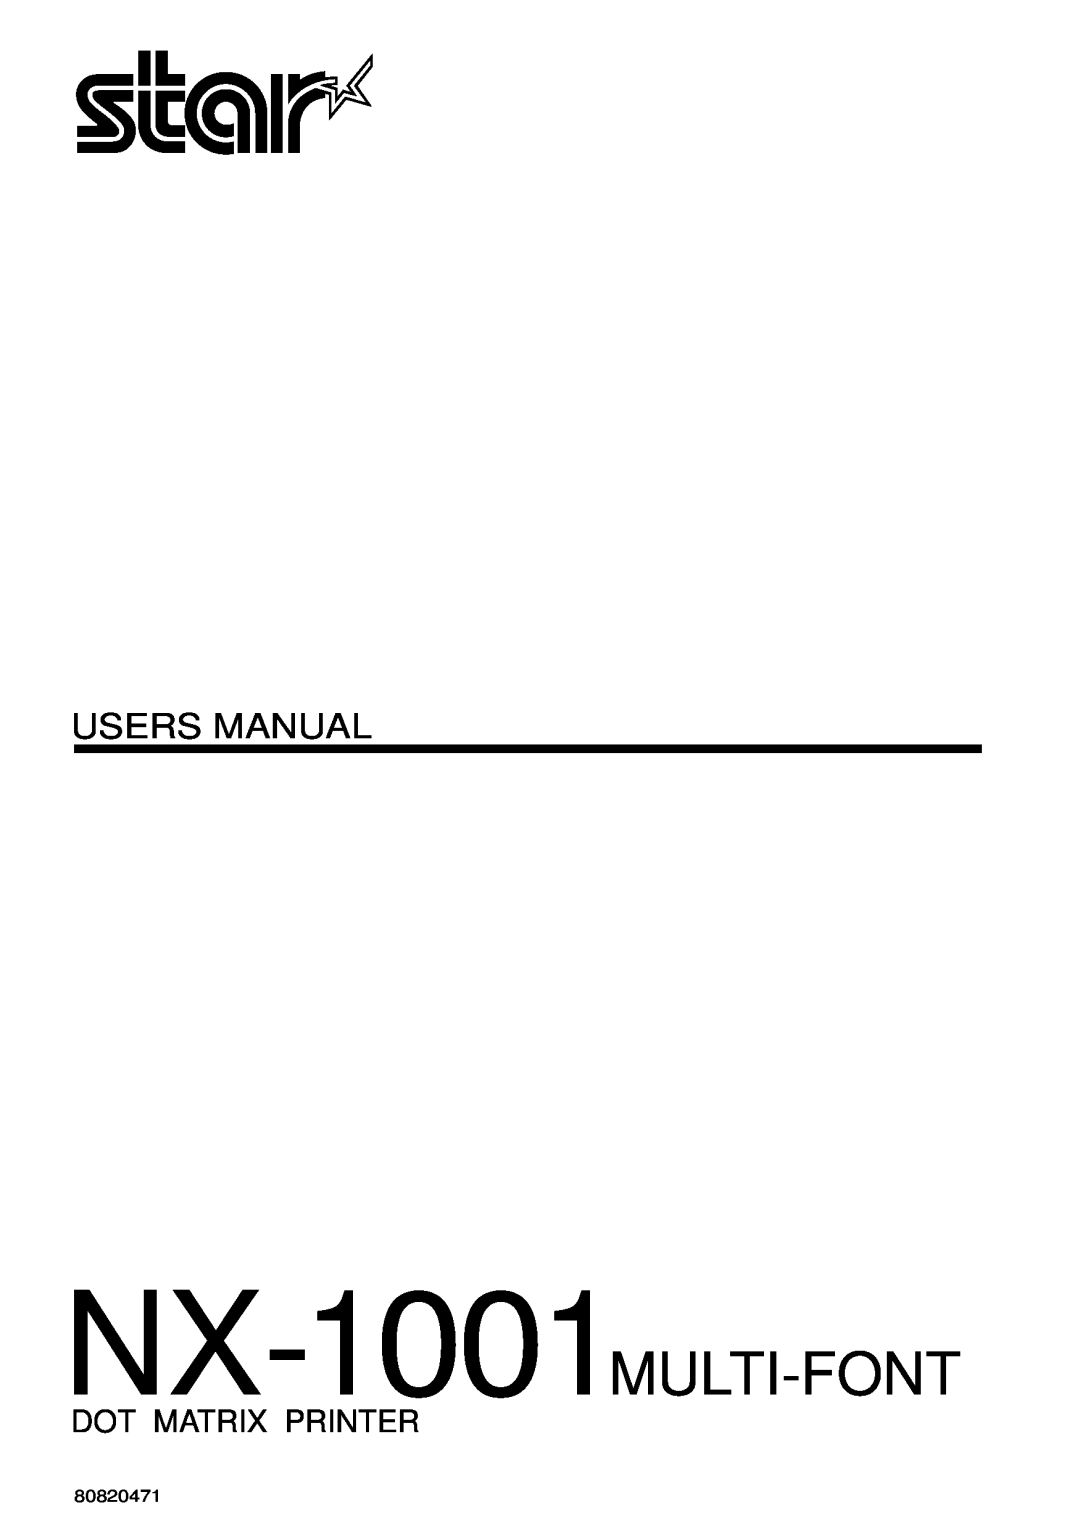 Star Micronics manual NX-1001MULTI-FONT, Users Manual, Dot Matrix Printer, 80820471 